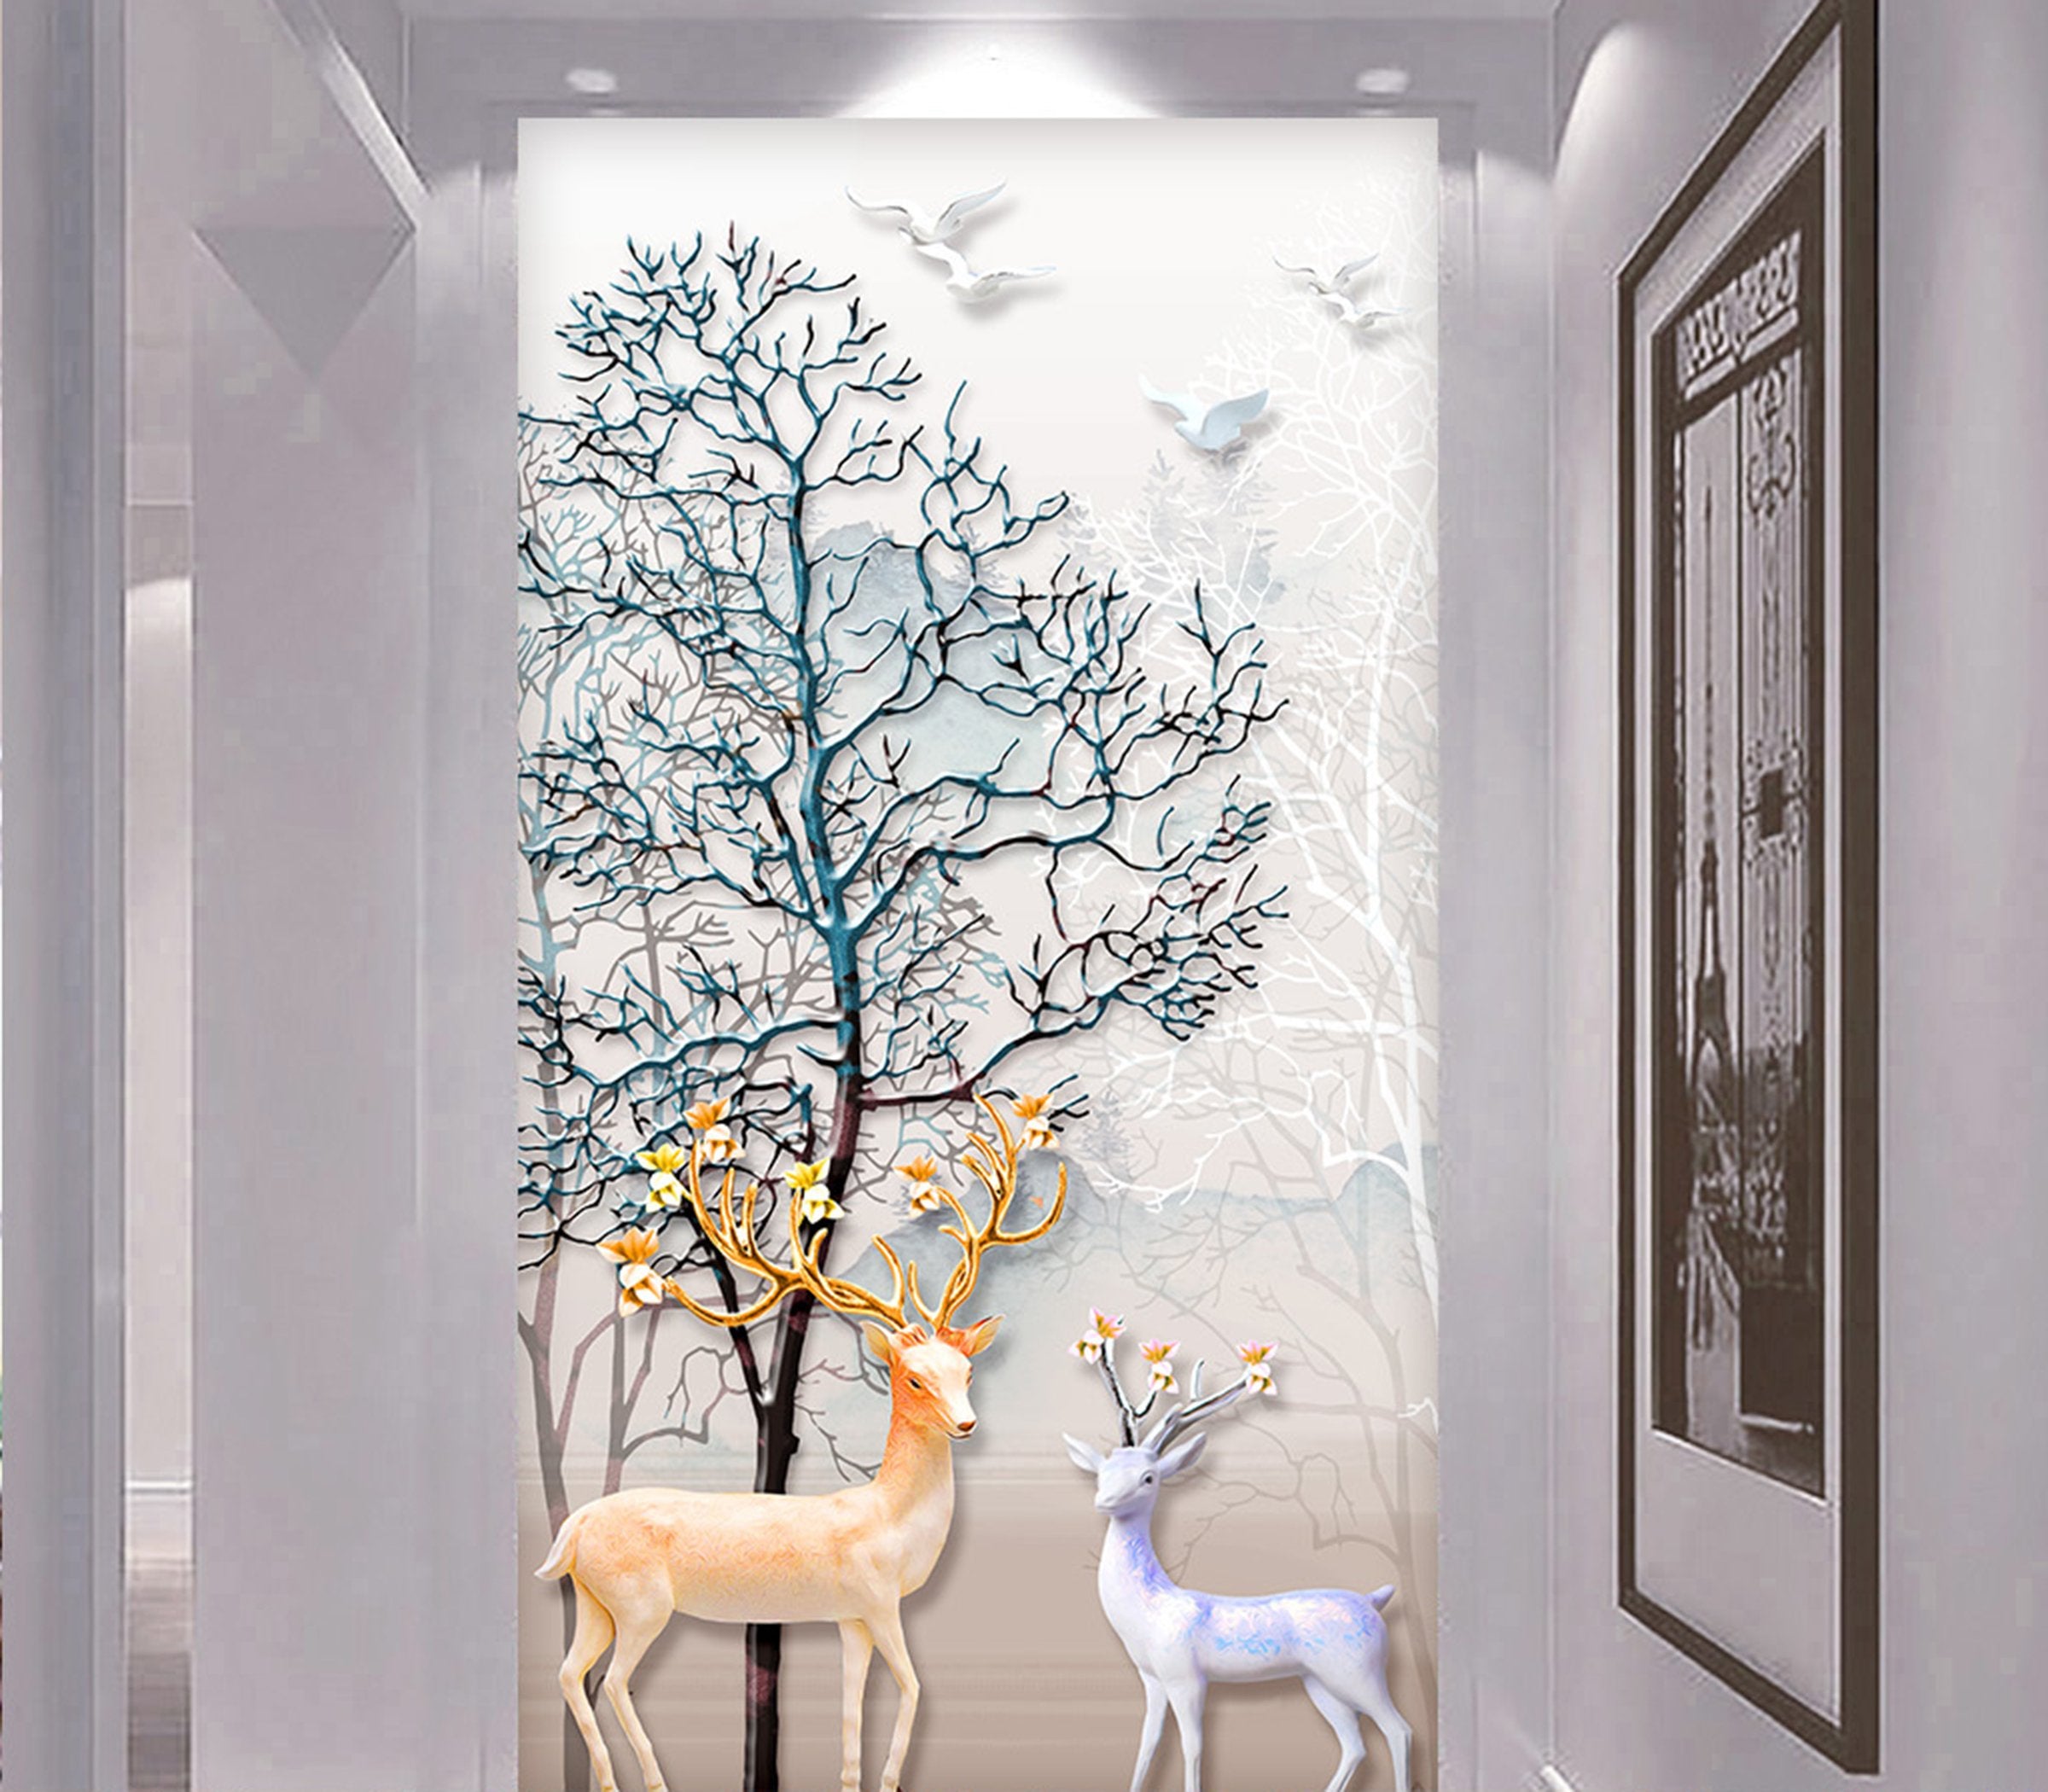 3D Leaping Deer 3387 Wall Paper Print Decal Deco Wall Mural Self-Adhesive  Wallpaper AJ US Lv (Woven Paper (Need Glue), 【205”x114”】 520x290cm(WxH)) 